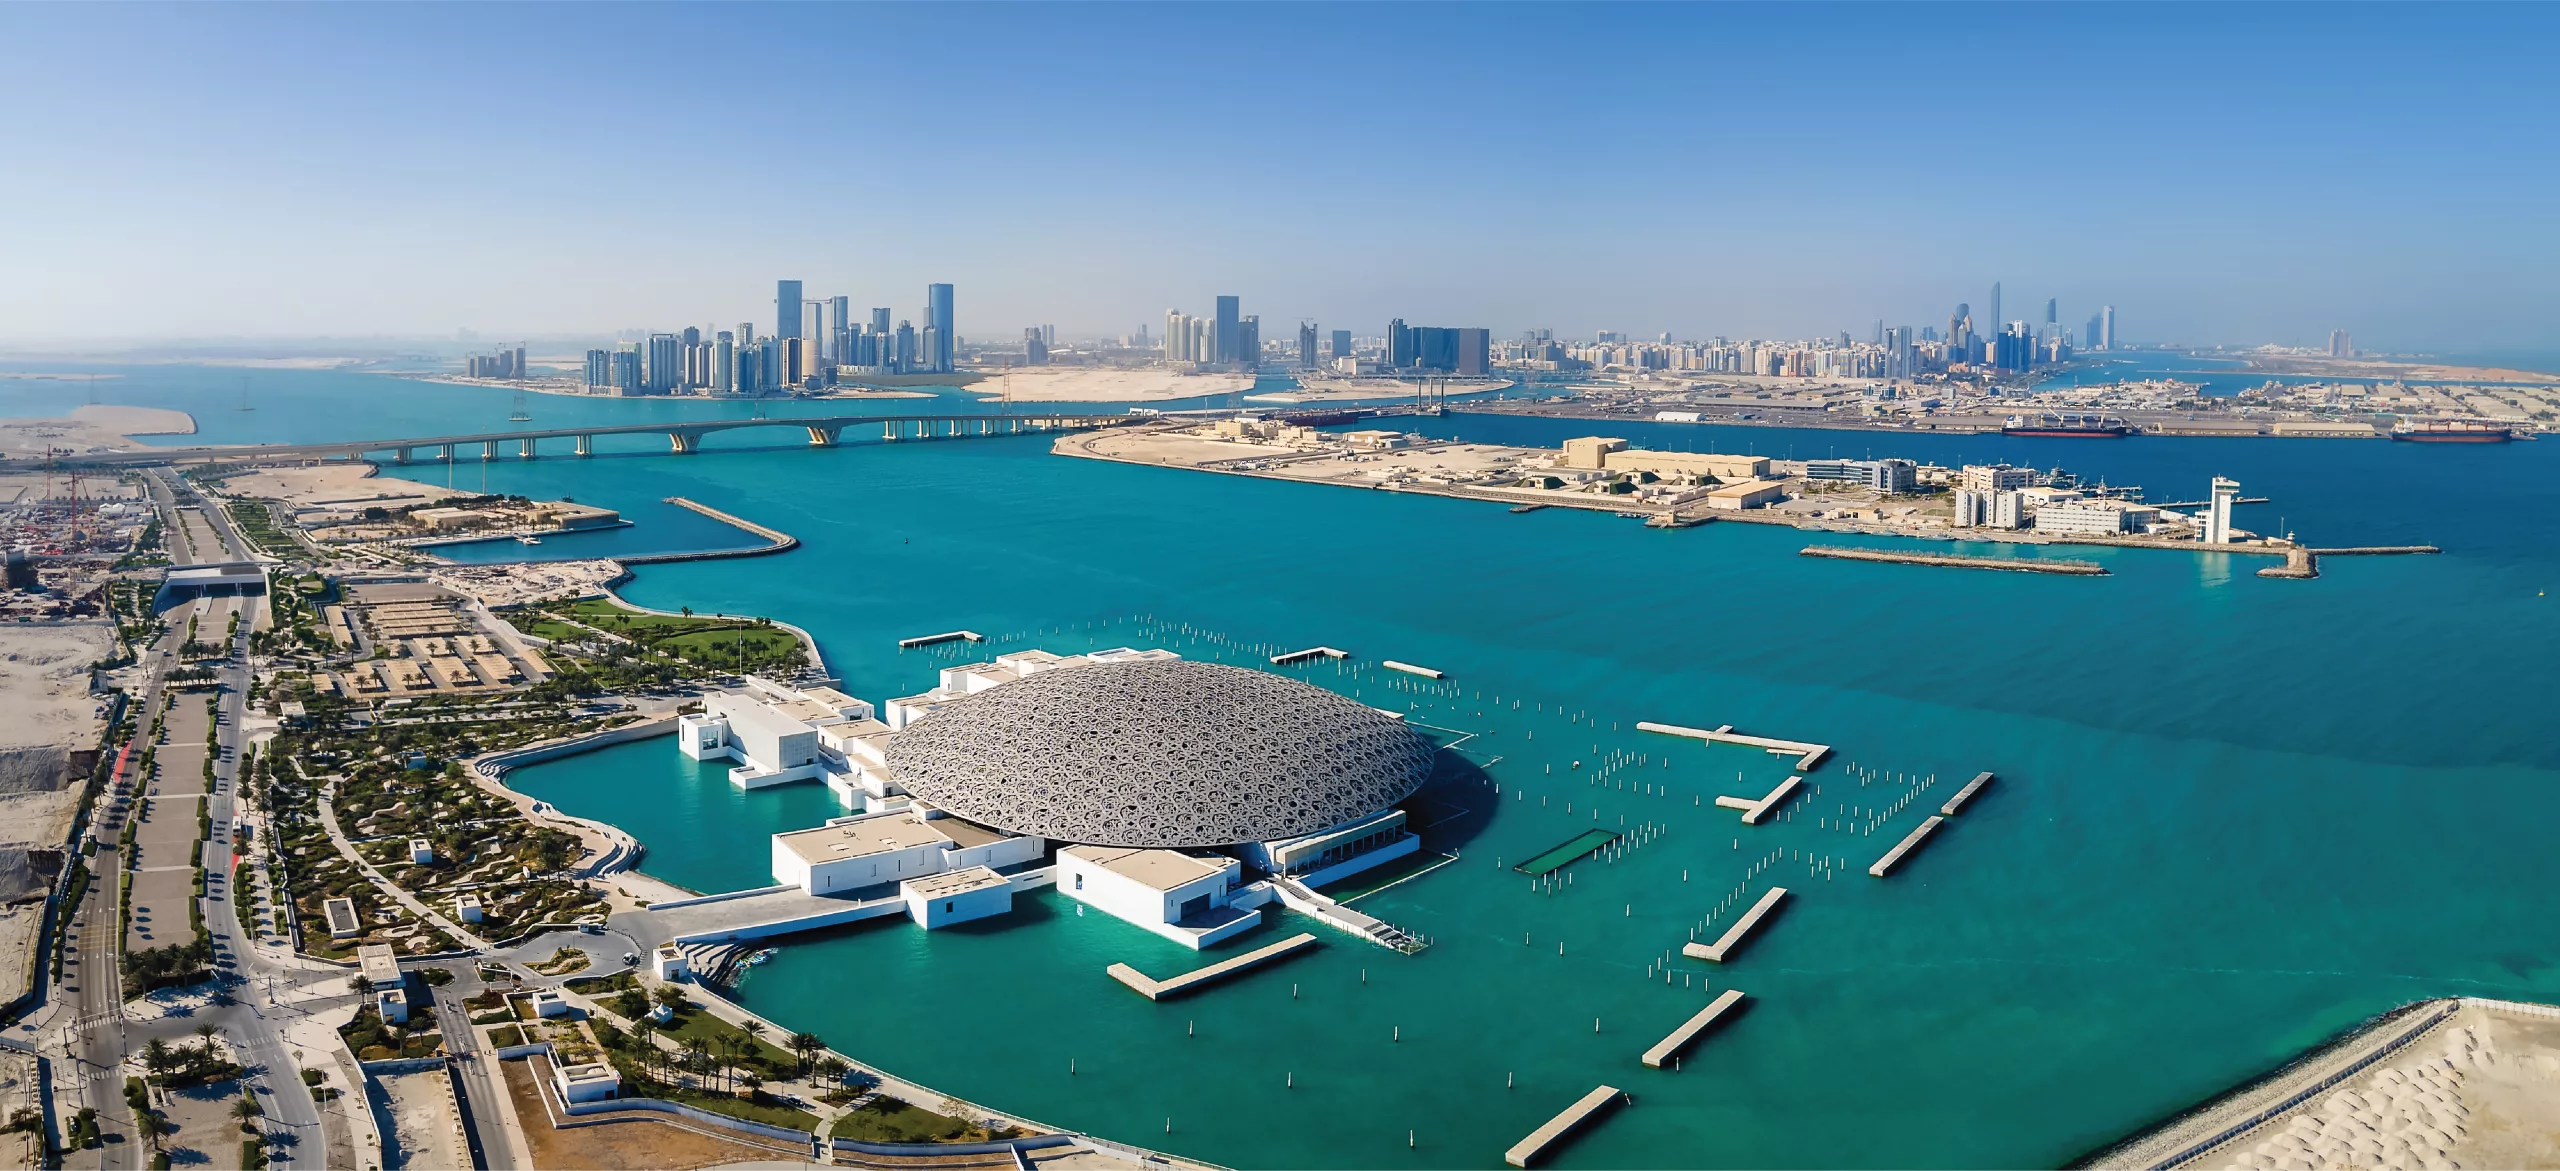 Abu Dhabi – An Excellent Package of Adventure, Desert, Beaches & Landmarks